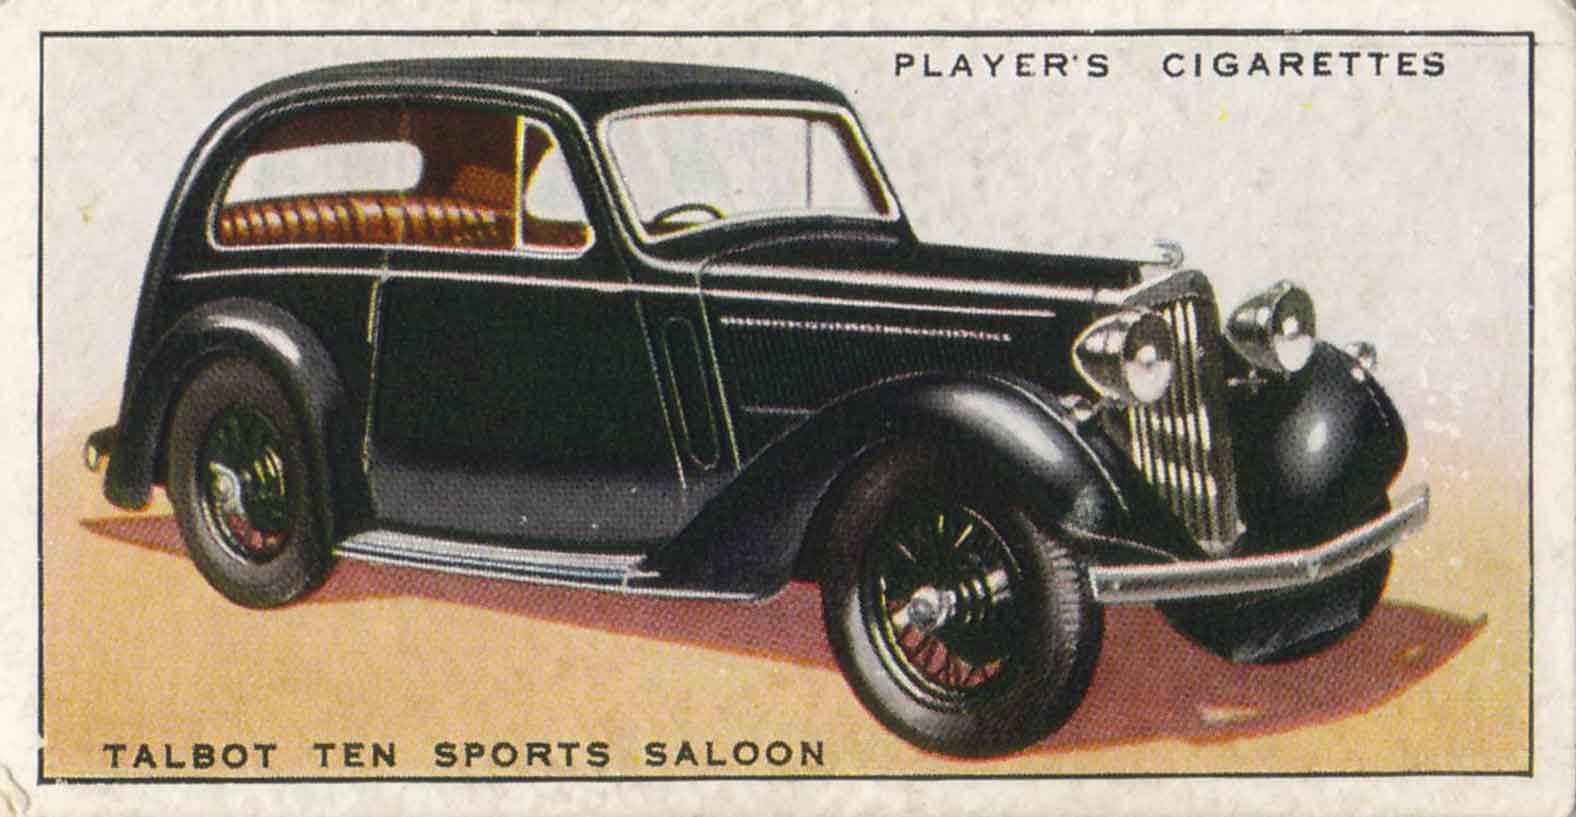 Talbot Ten Sports Saloon. 1937 cigarette card.